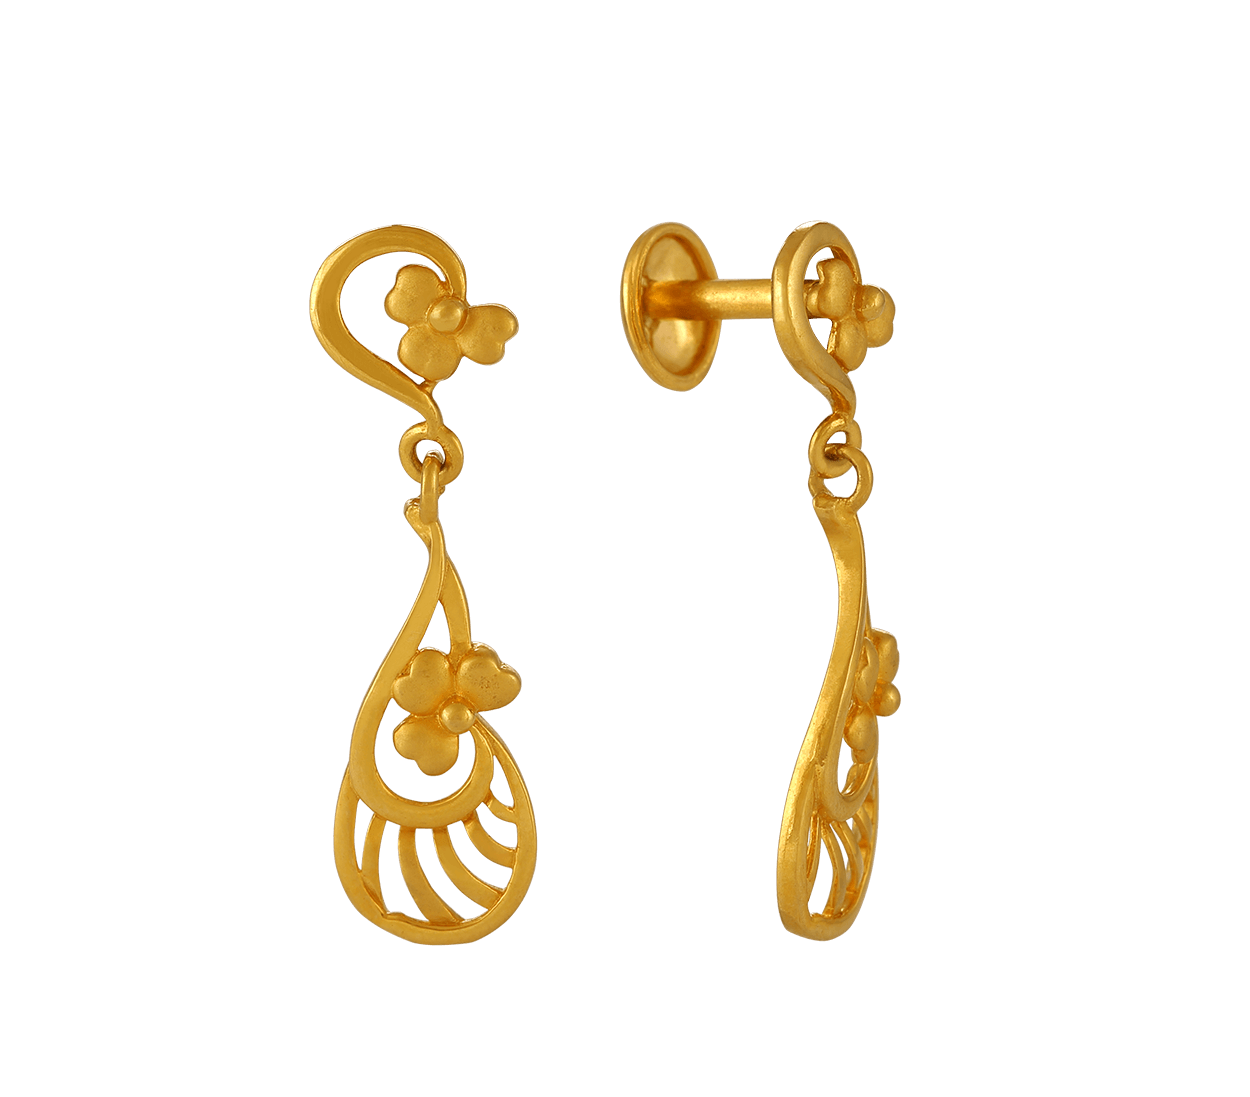 Beautiful Golden Drop Earrings